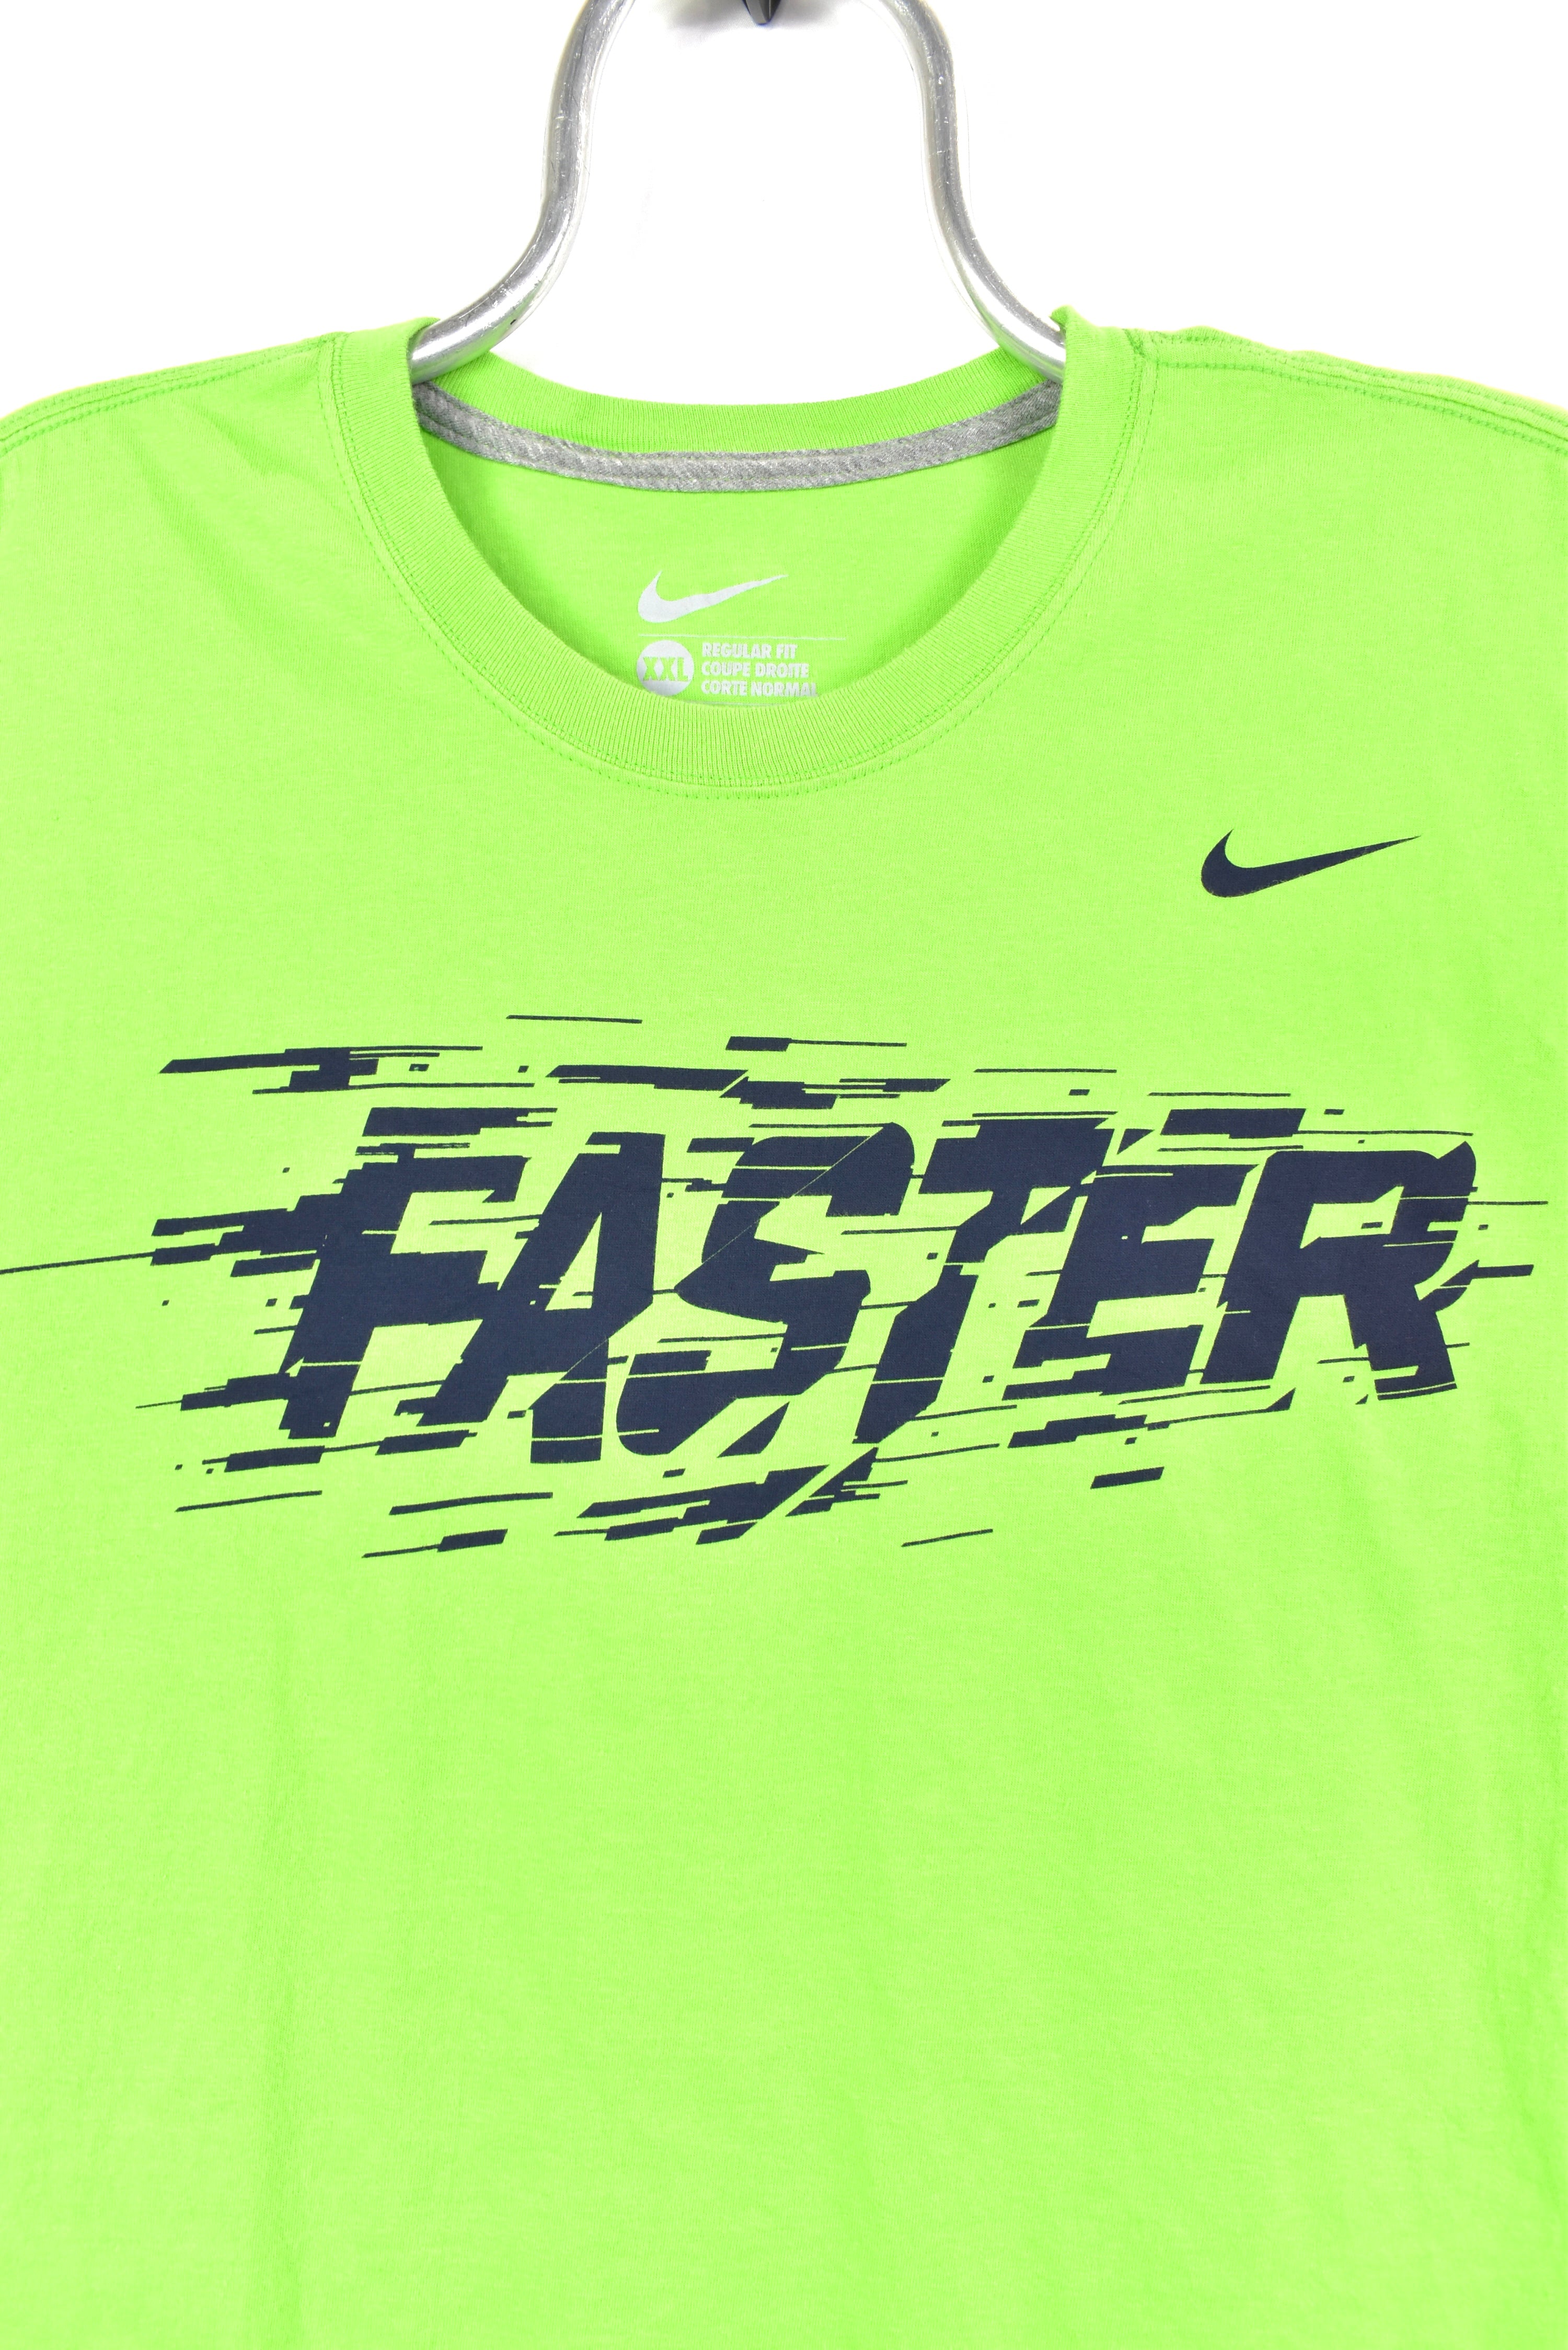 Modern Nike shirt - XL, green NIKE